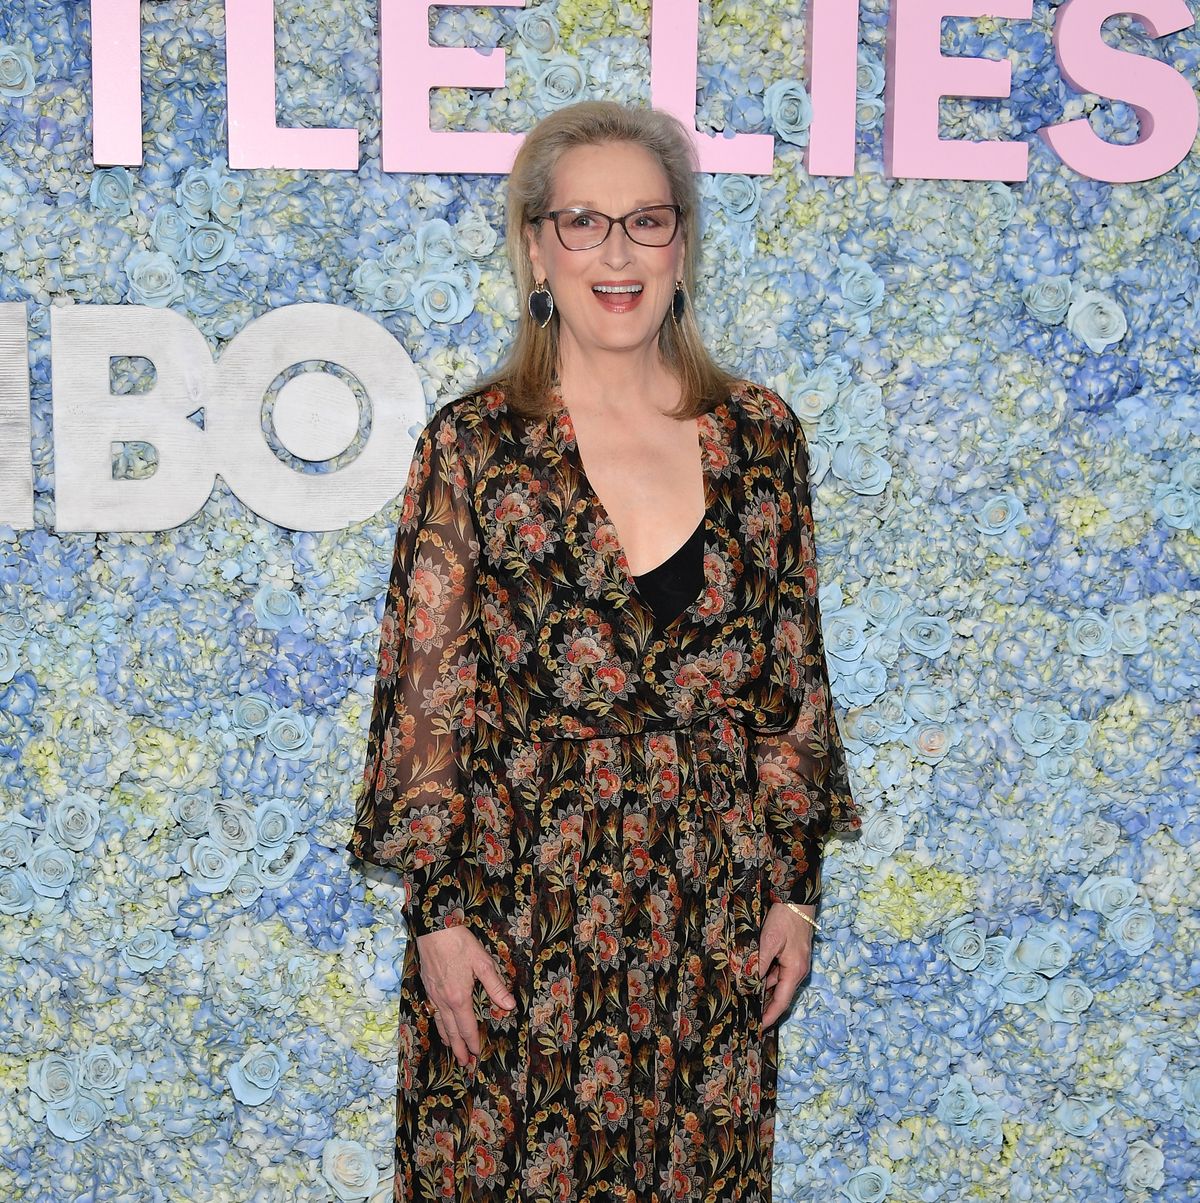 Meryl Streep's Daughters Land a Fashion Campaign - Fashionista